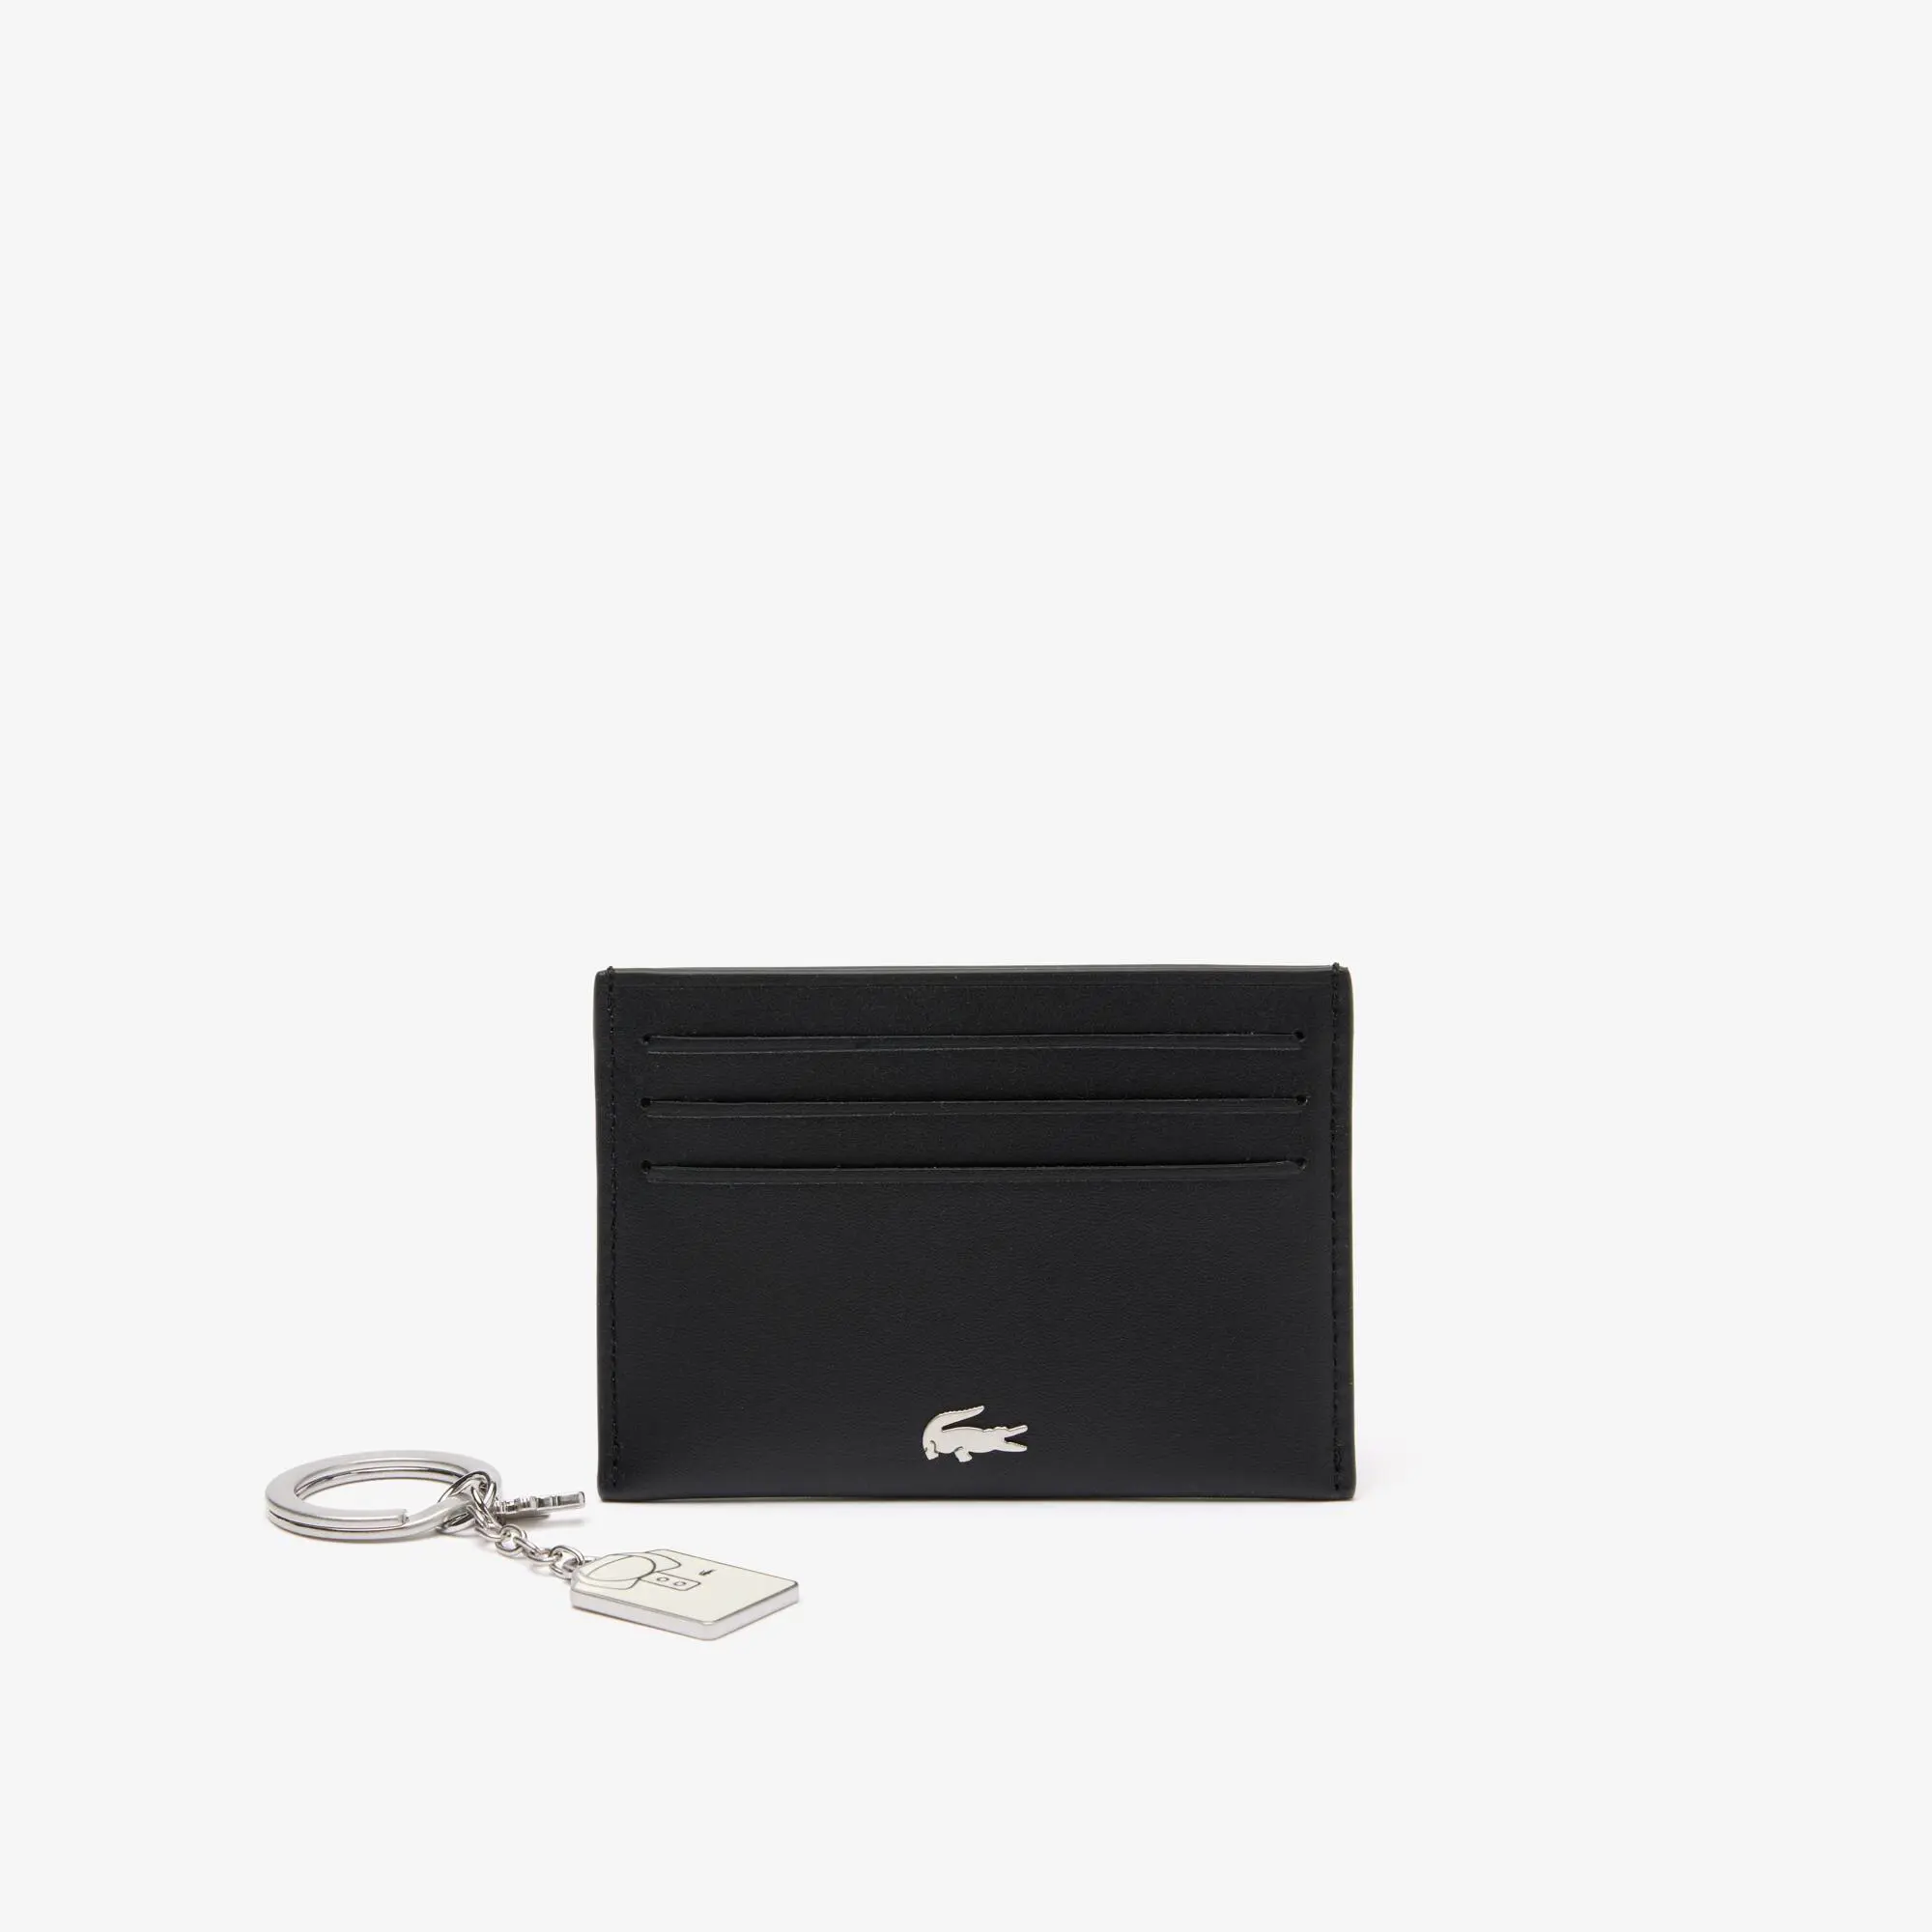 Lacoste Men's Card Holder & Polo Key Chain Gift Set. 1